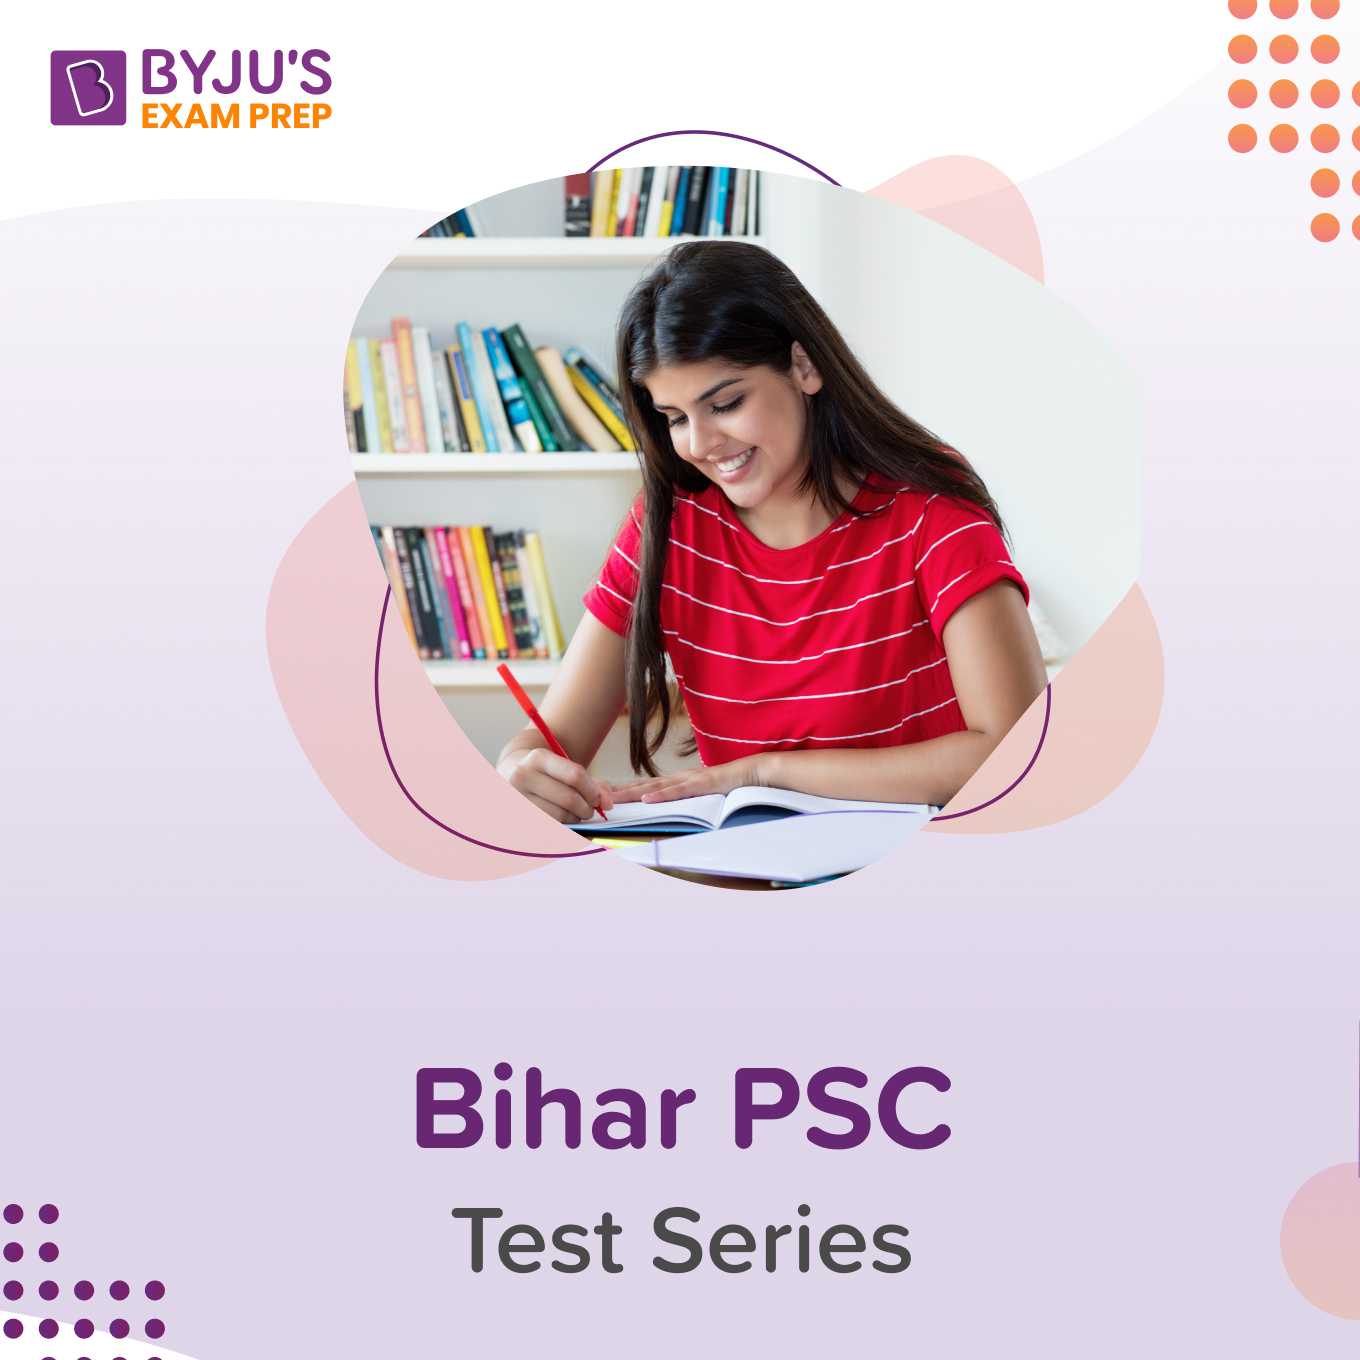 BPSC - Test Series